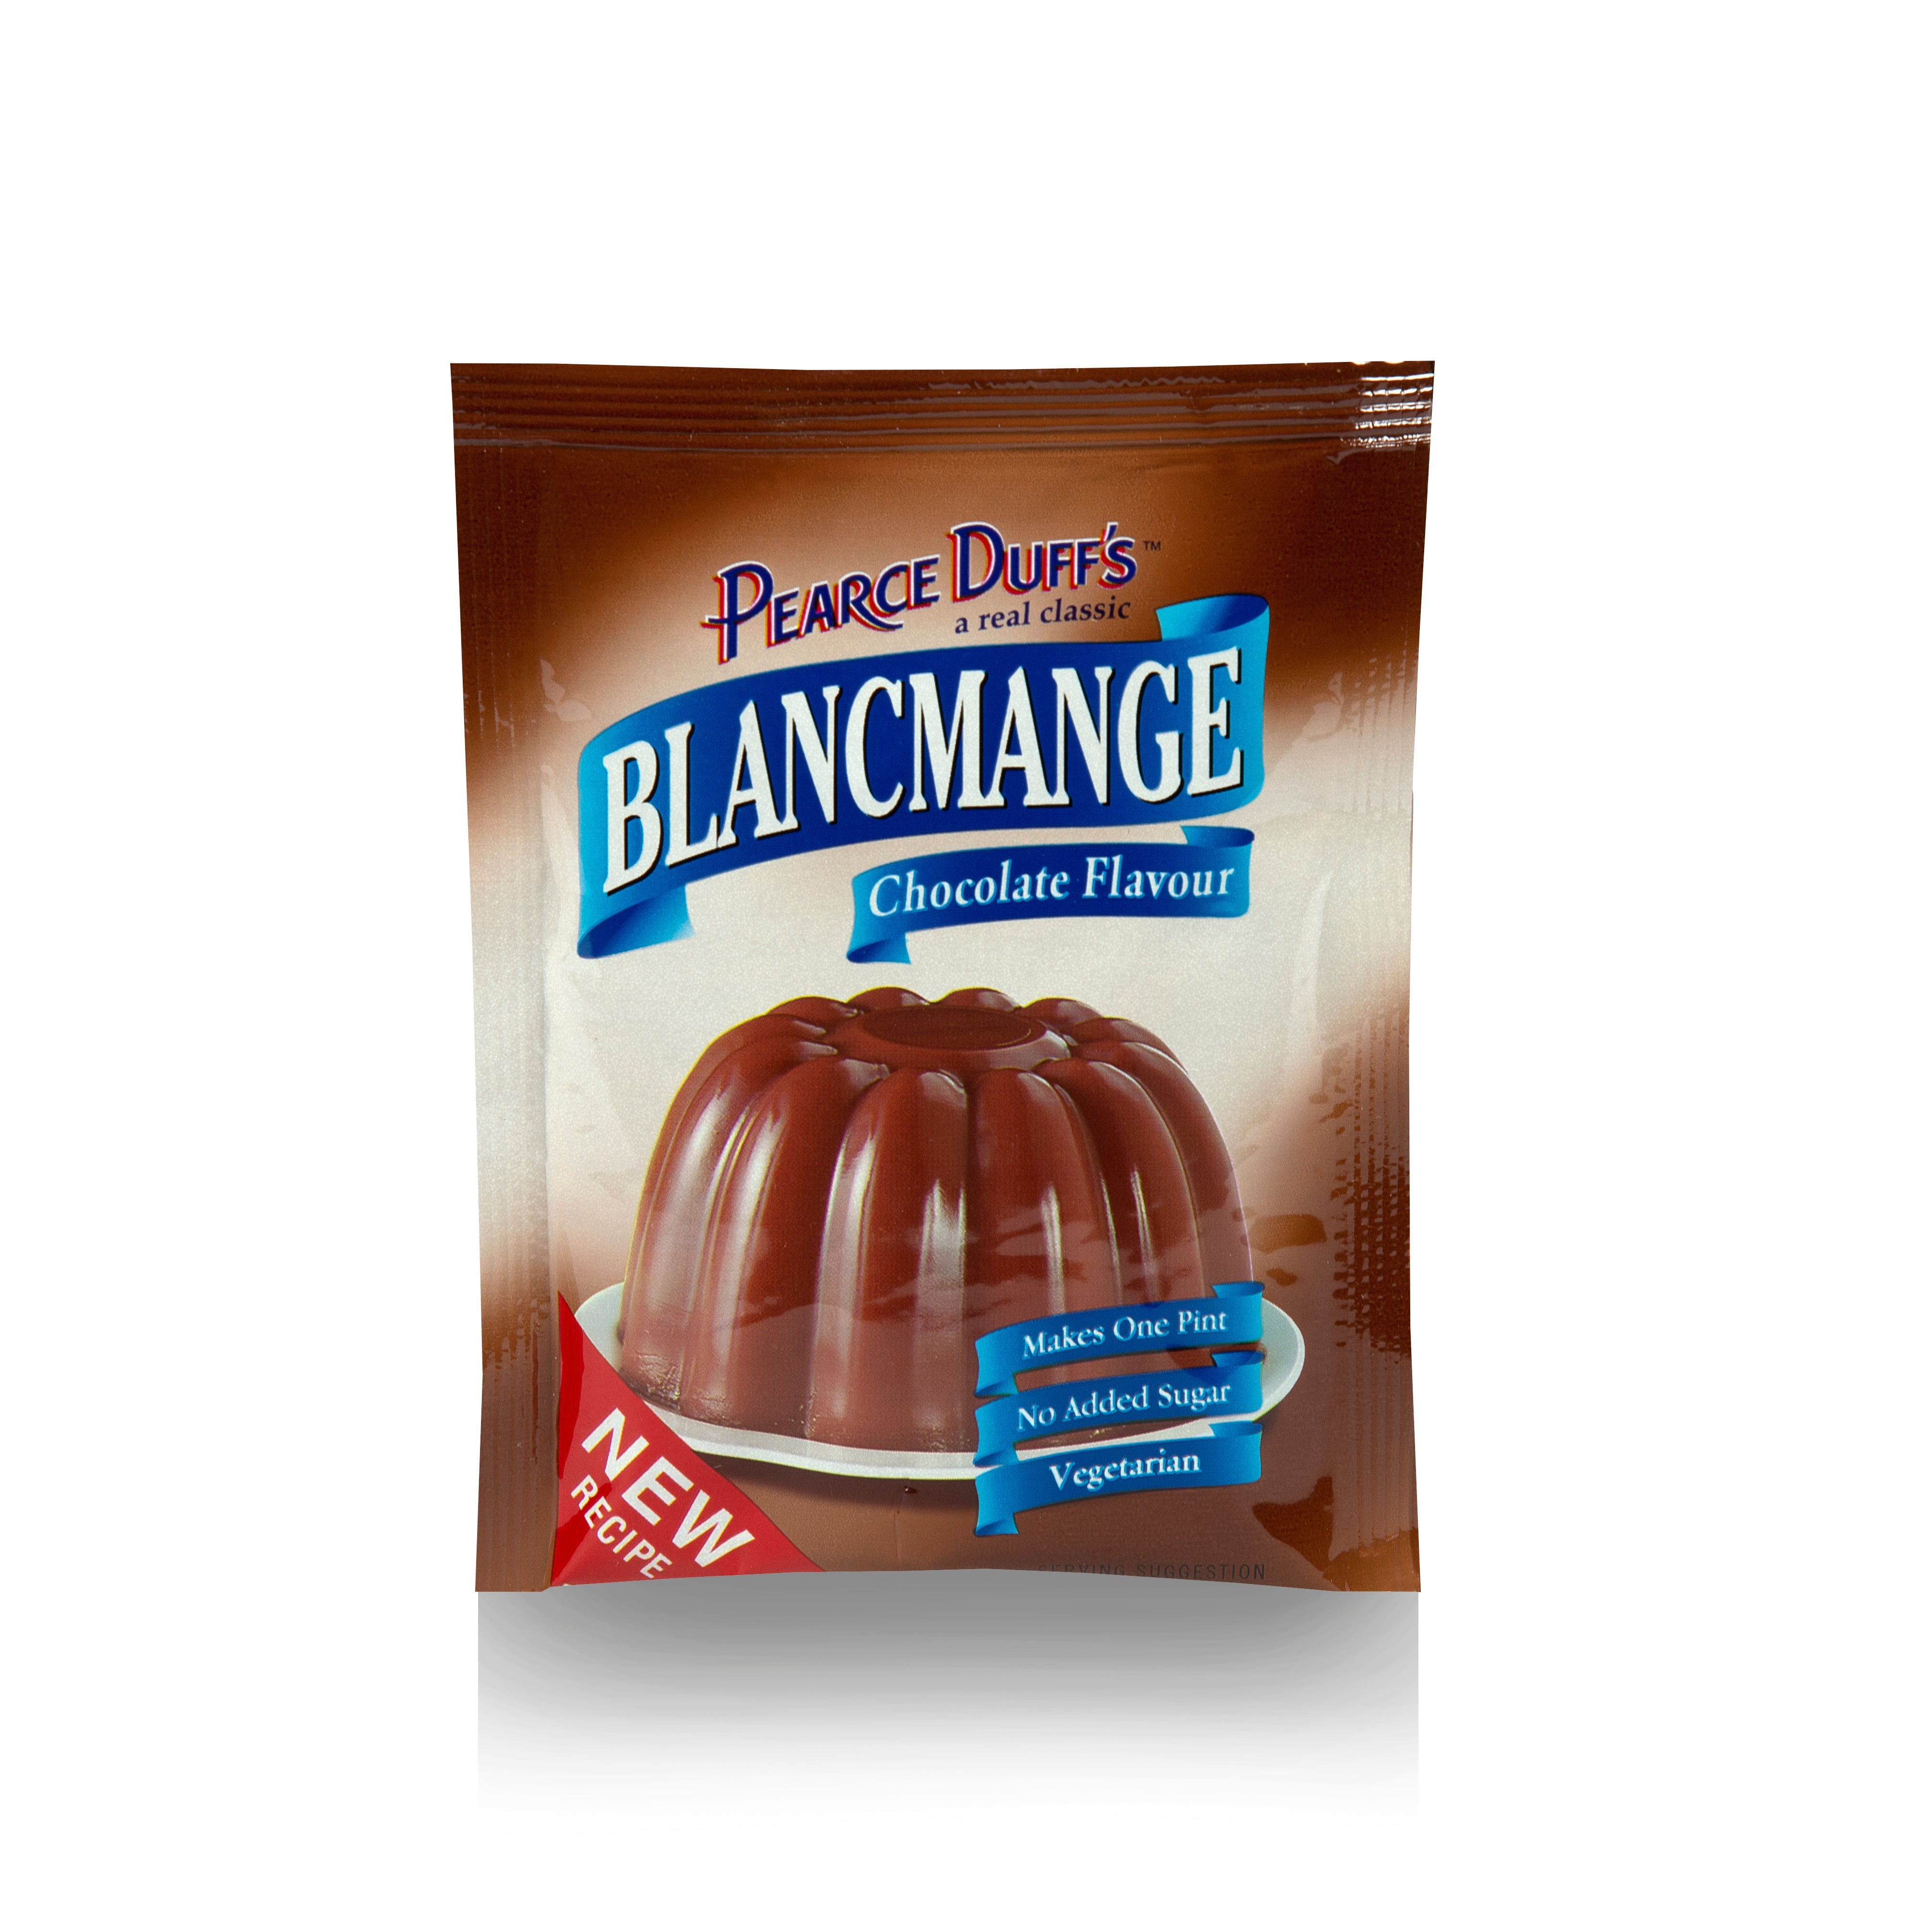 Pearce Duff's Chocolate Blancmange 41g - Pack of 12